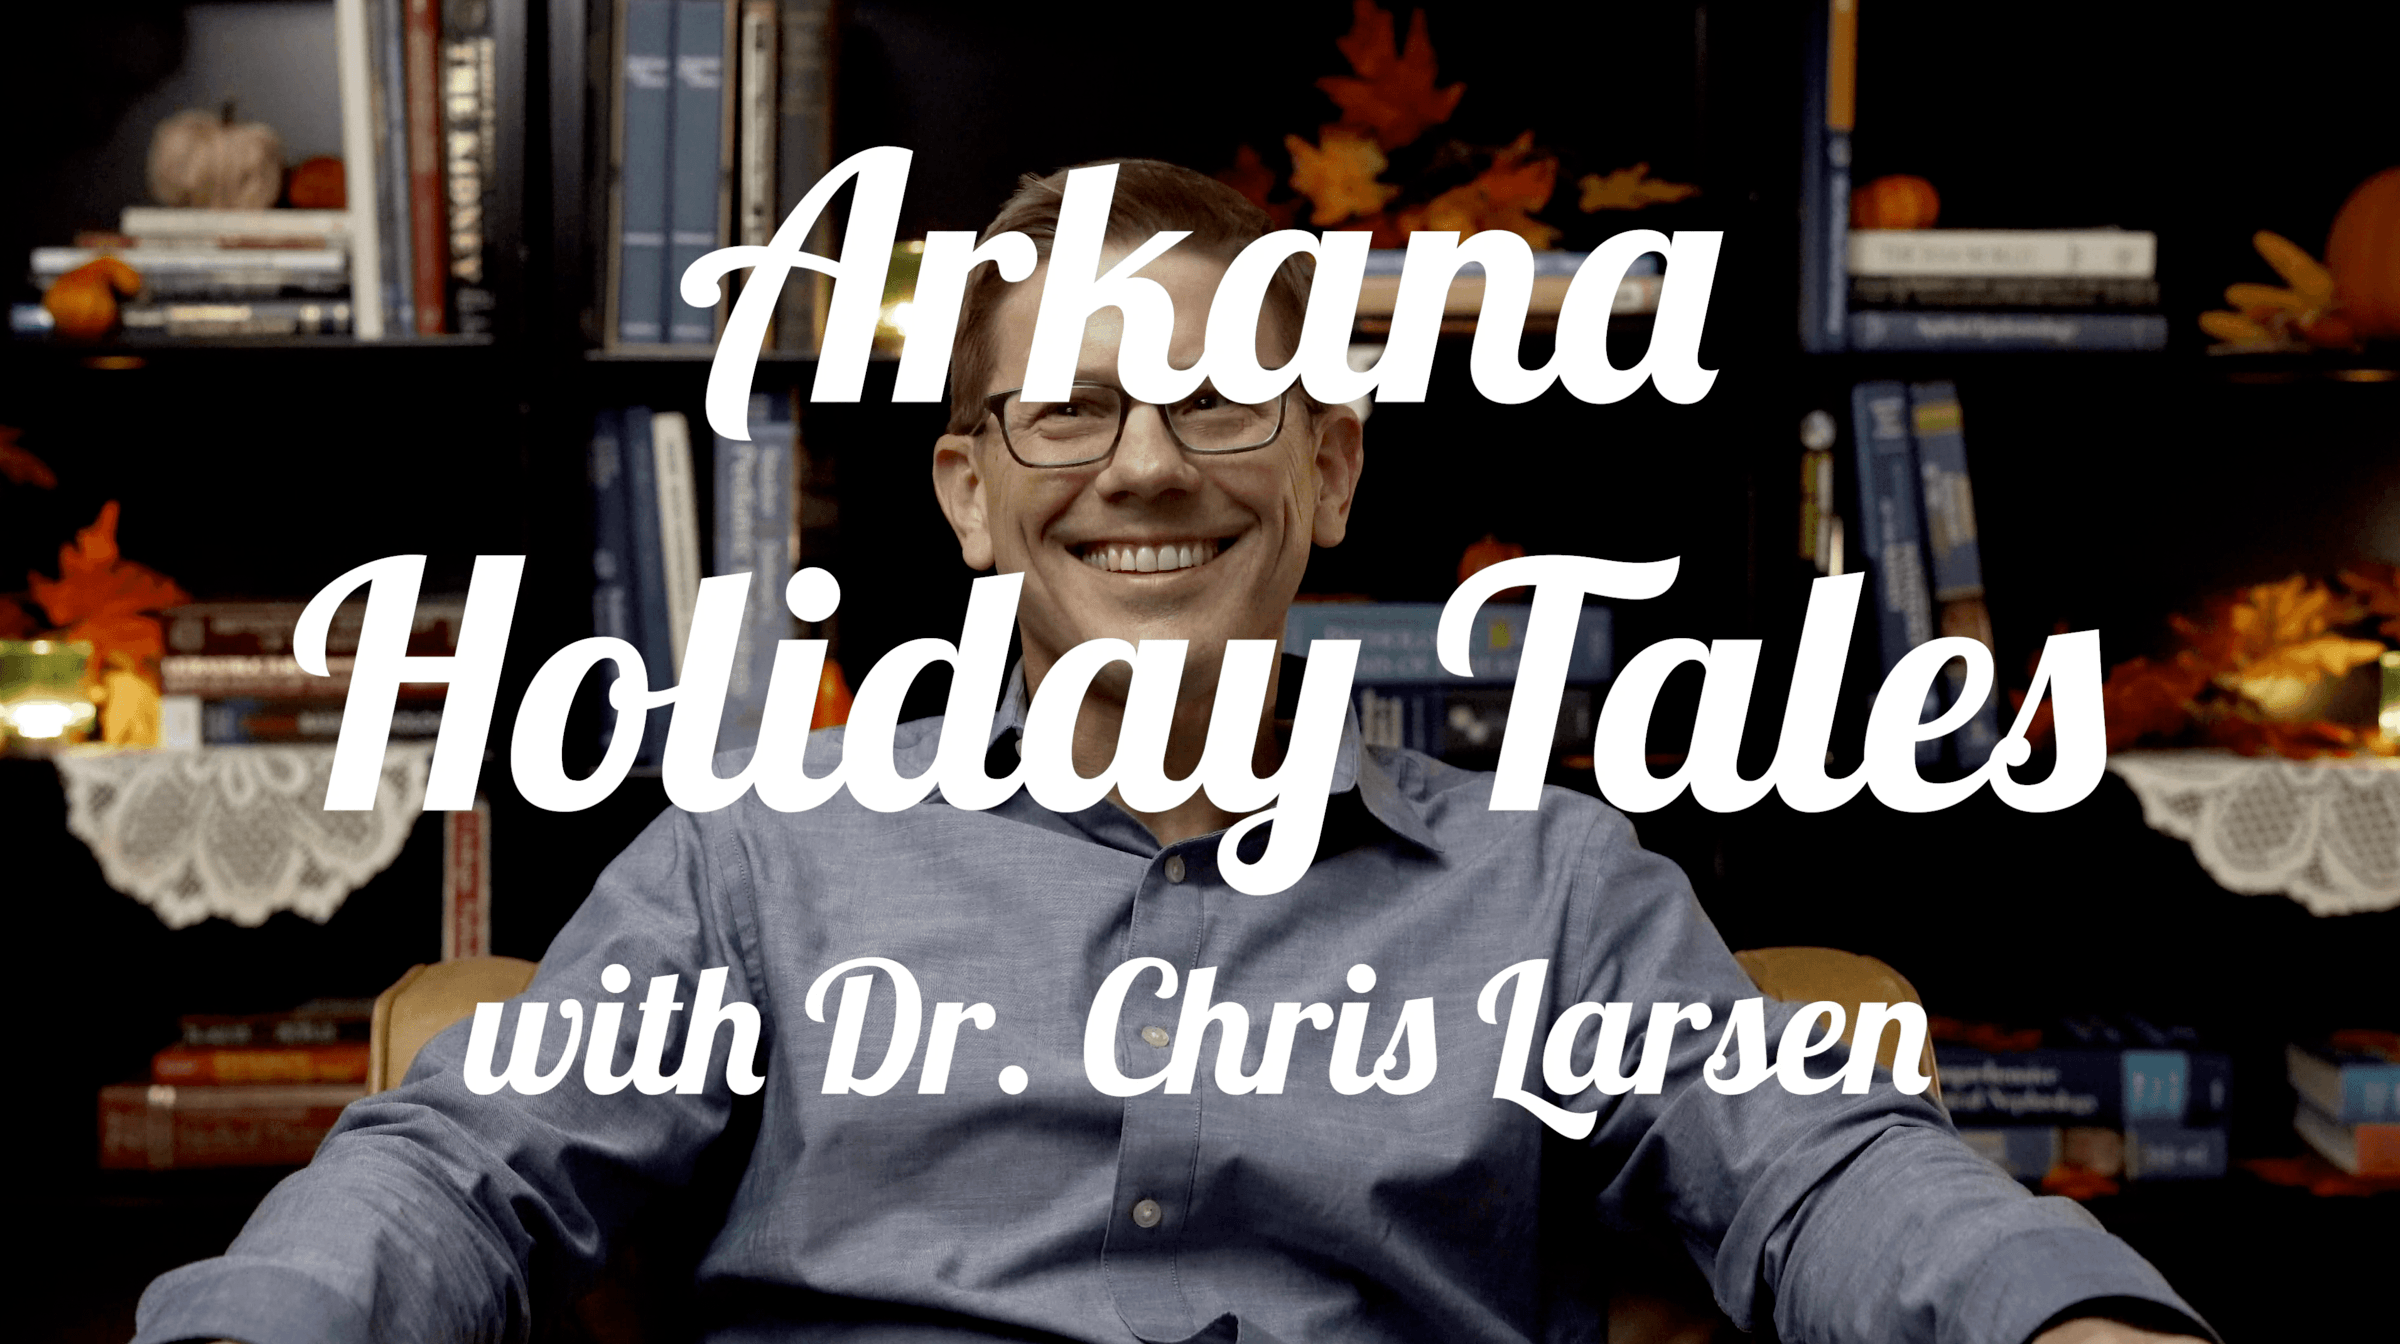 Larsen, Thanksgiving, renal pathology, Arkana Holiday Tales, kidney path